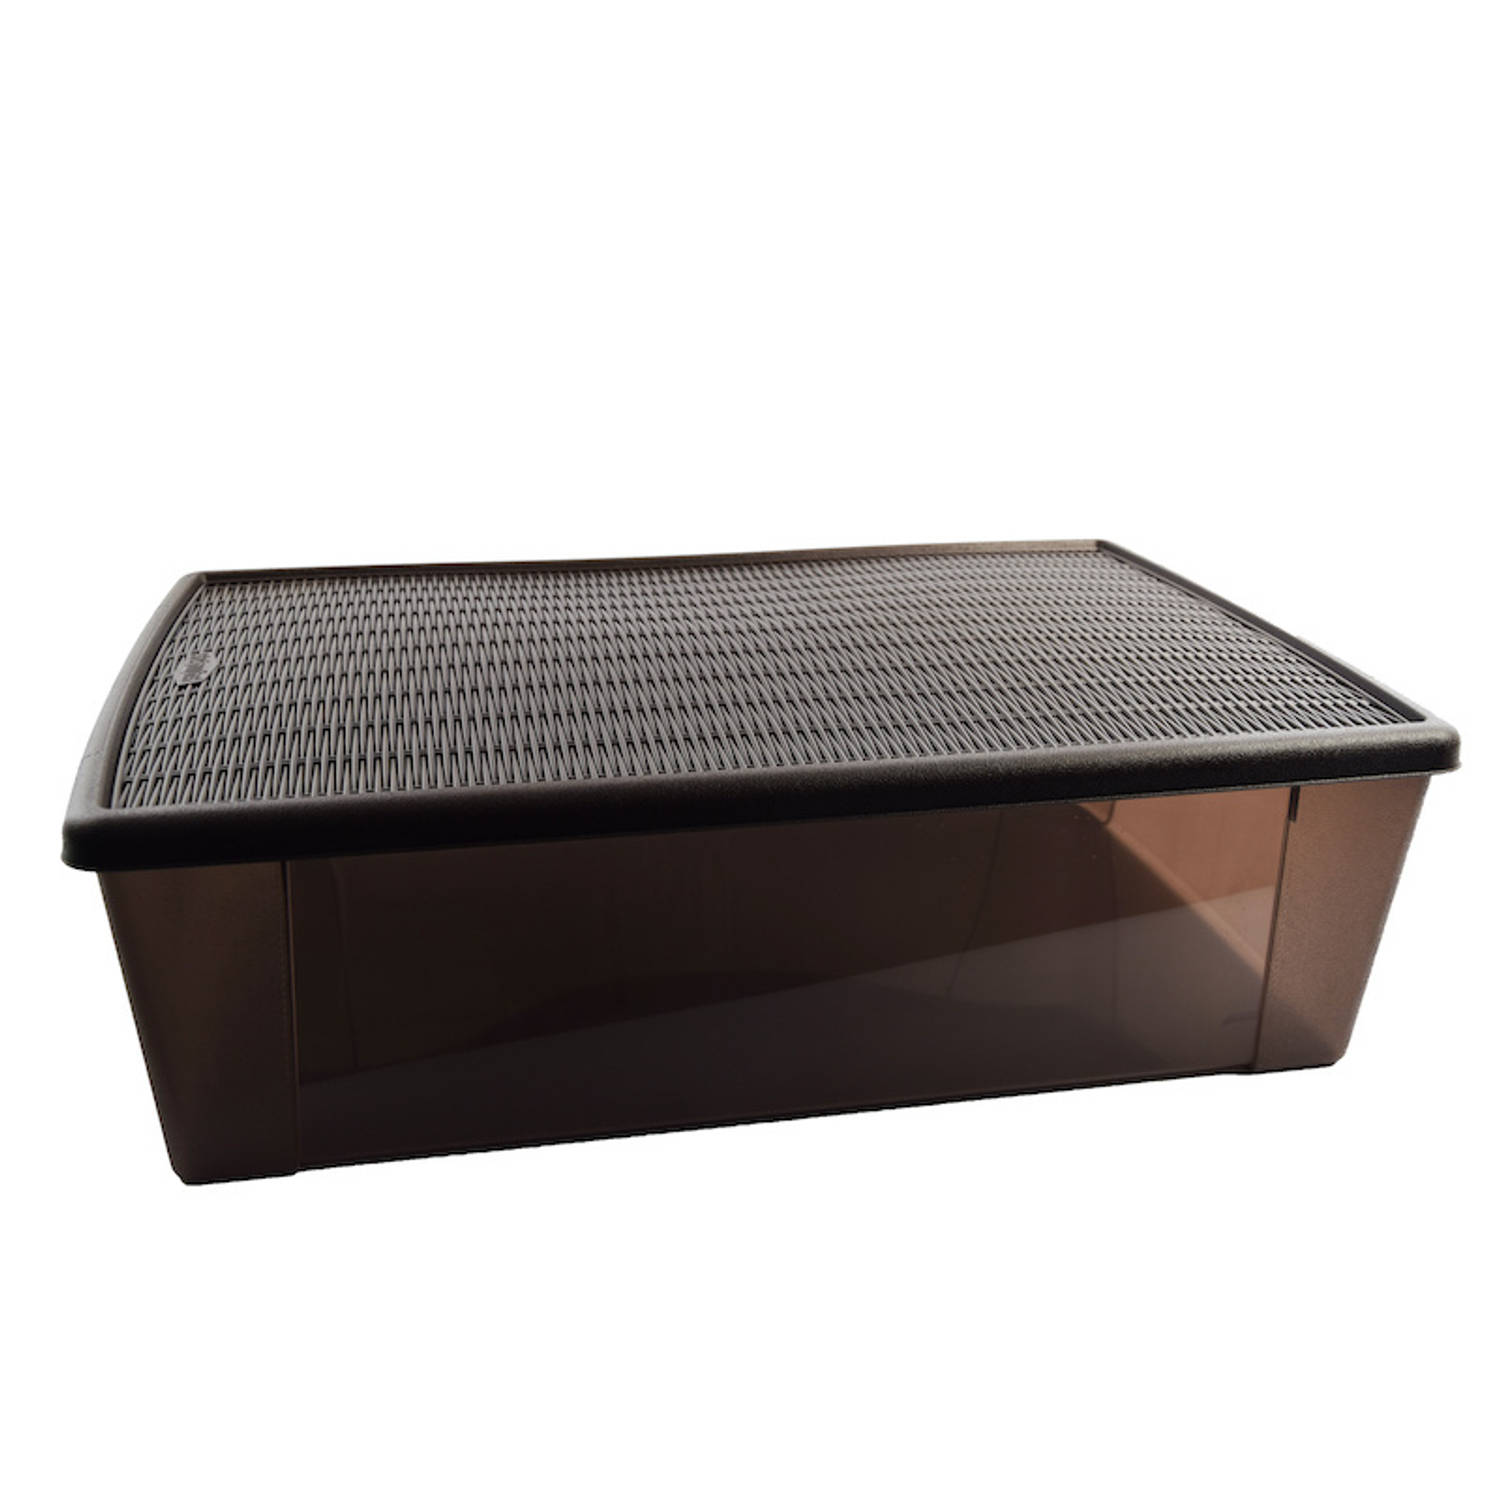 Opbergbox - onderbedbox - Onderbedbox 32 liter chocolate bruin- 59 cm x 39 cm x17 cm hoog